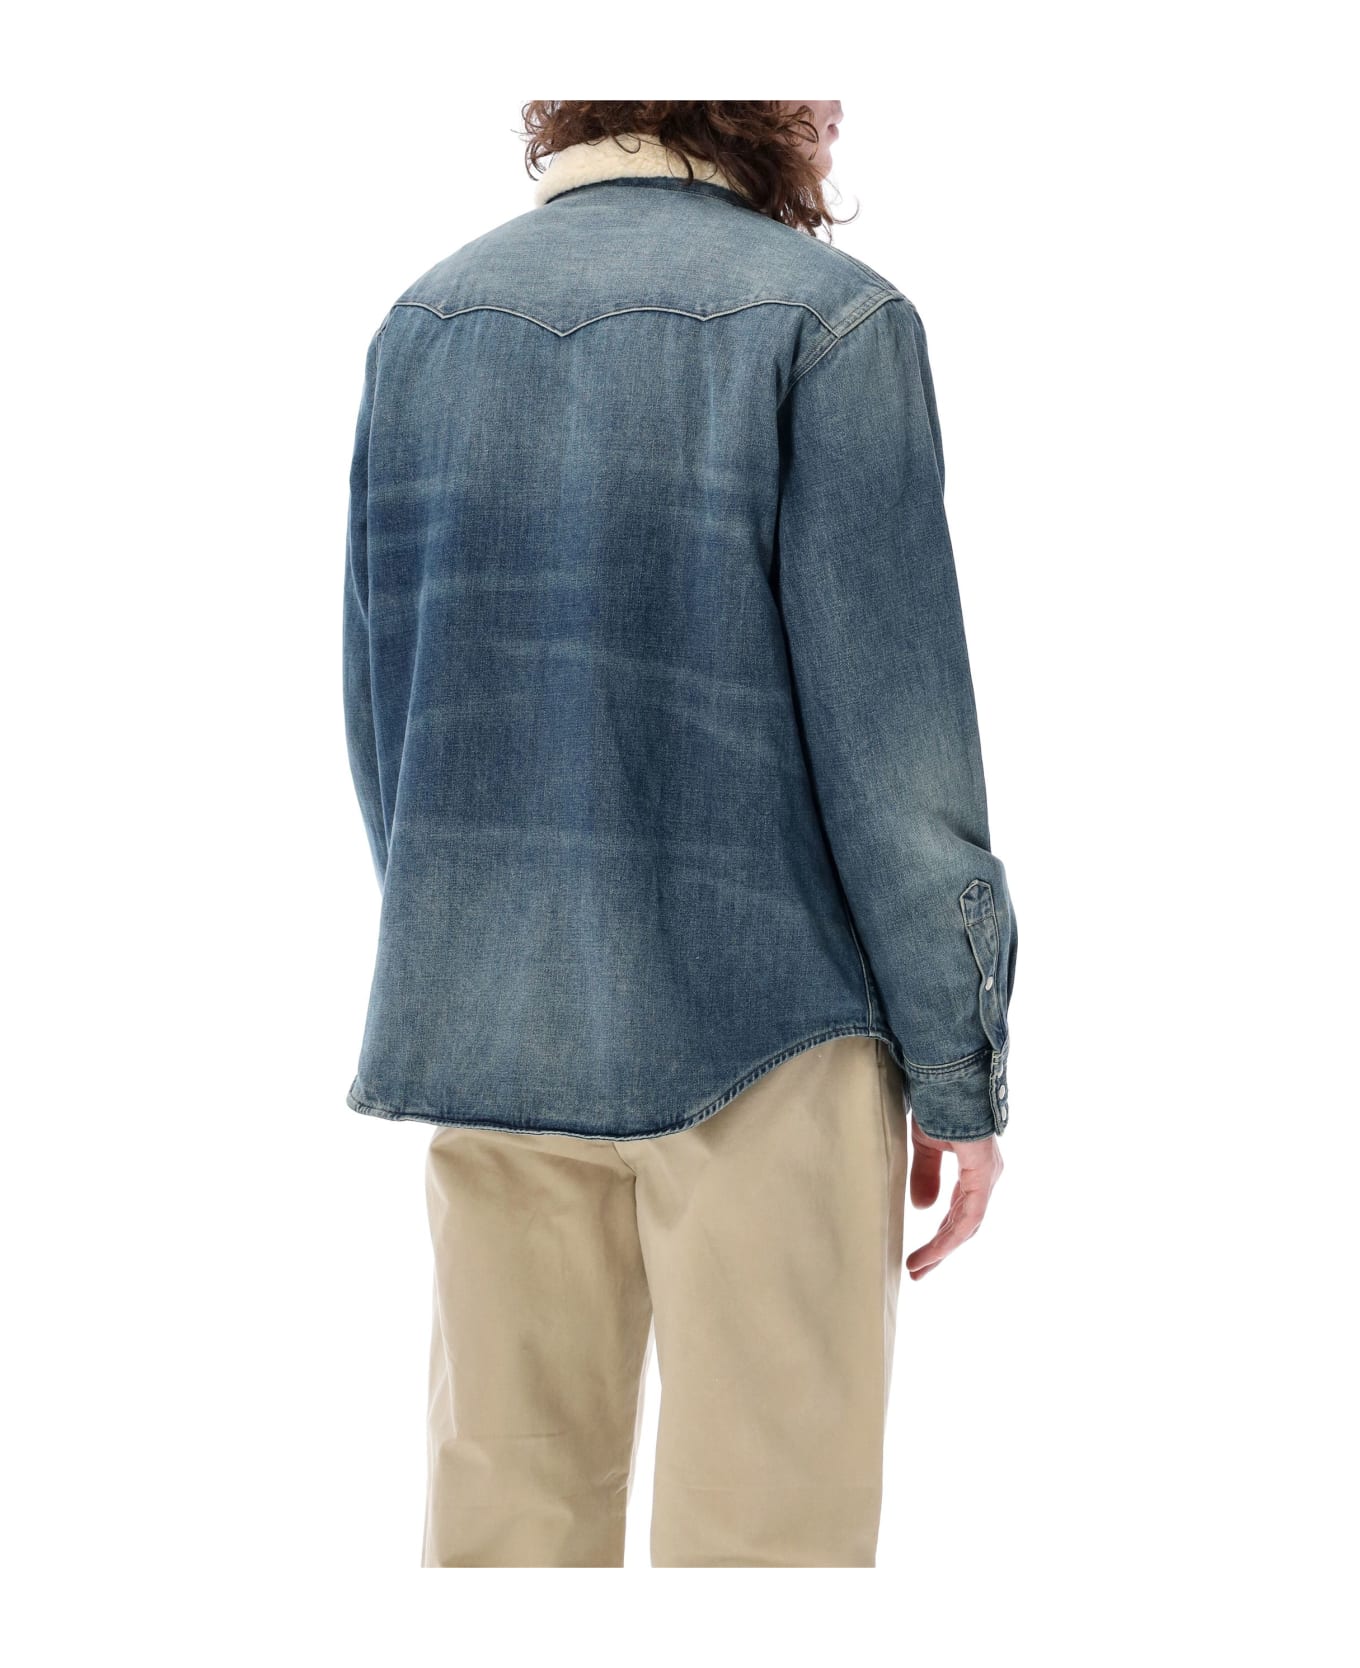 Polo Ralph Lauren The New Denim Project Jacket - BLUE